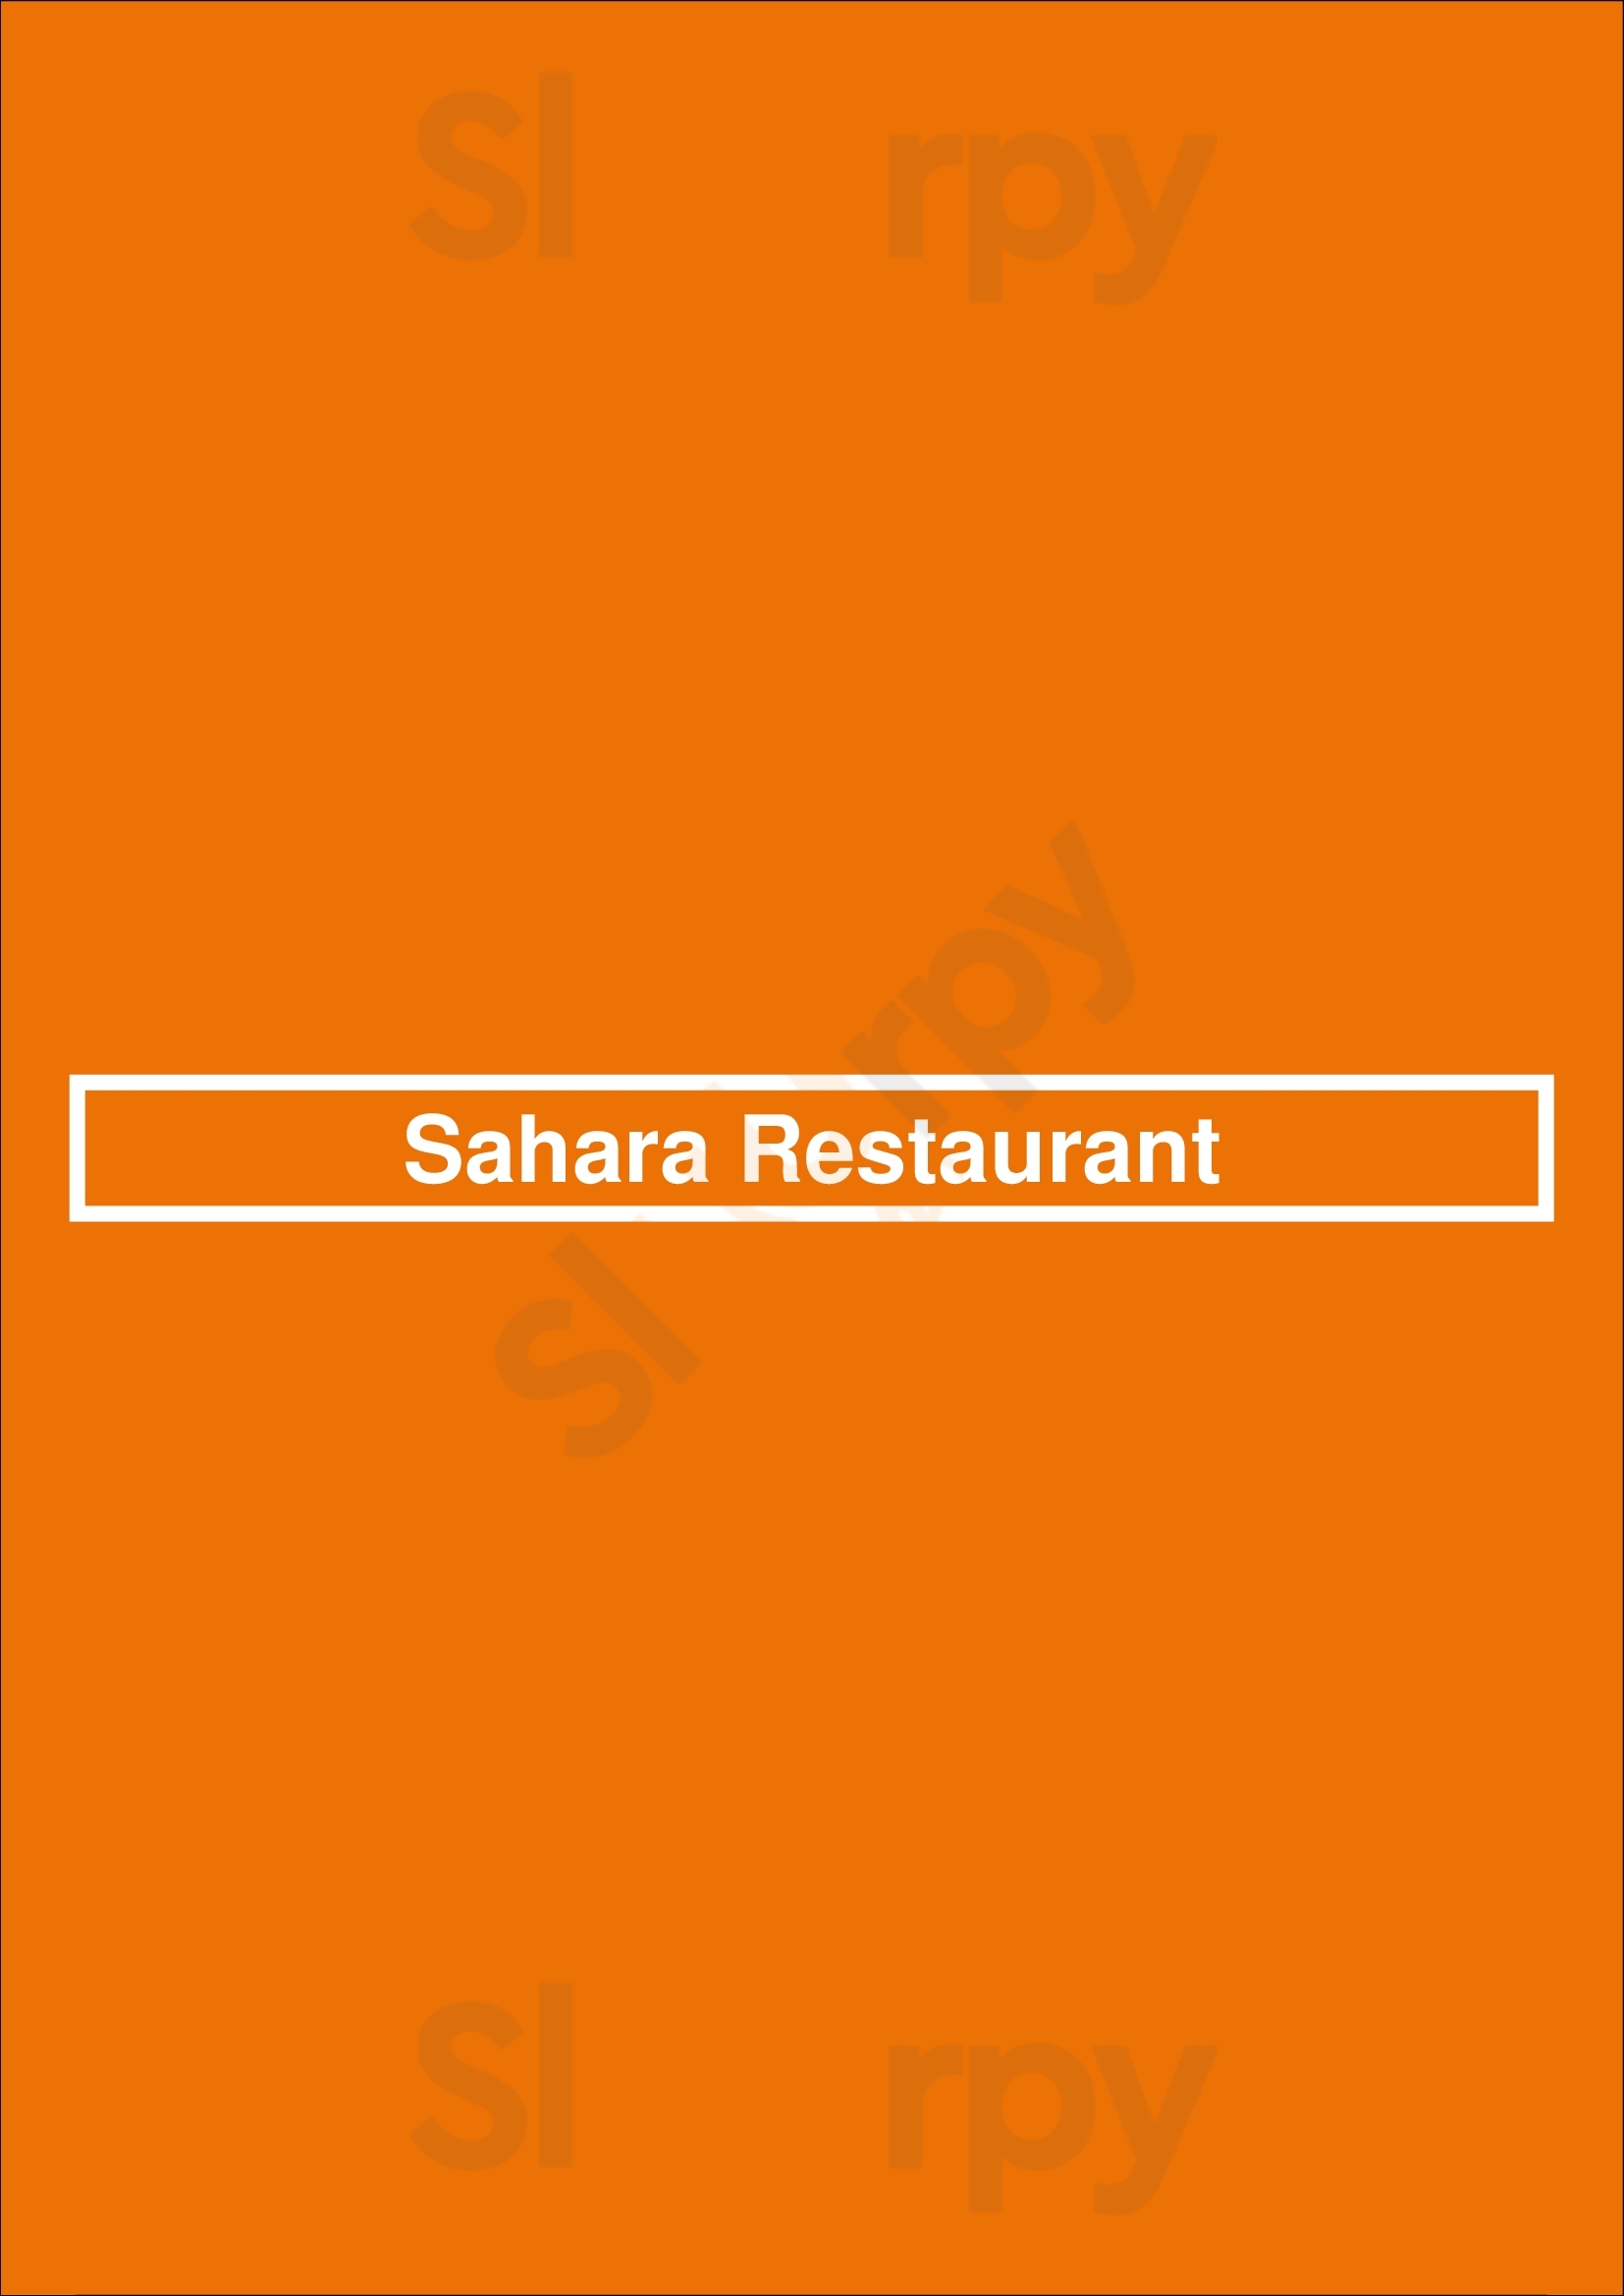 Sahara Restaurant Maumee Menu - 1